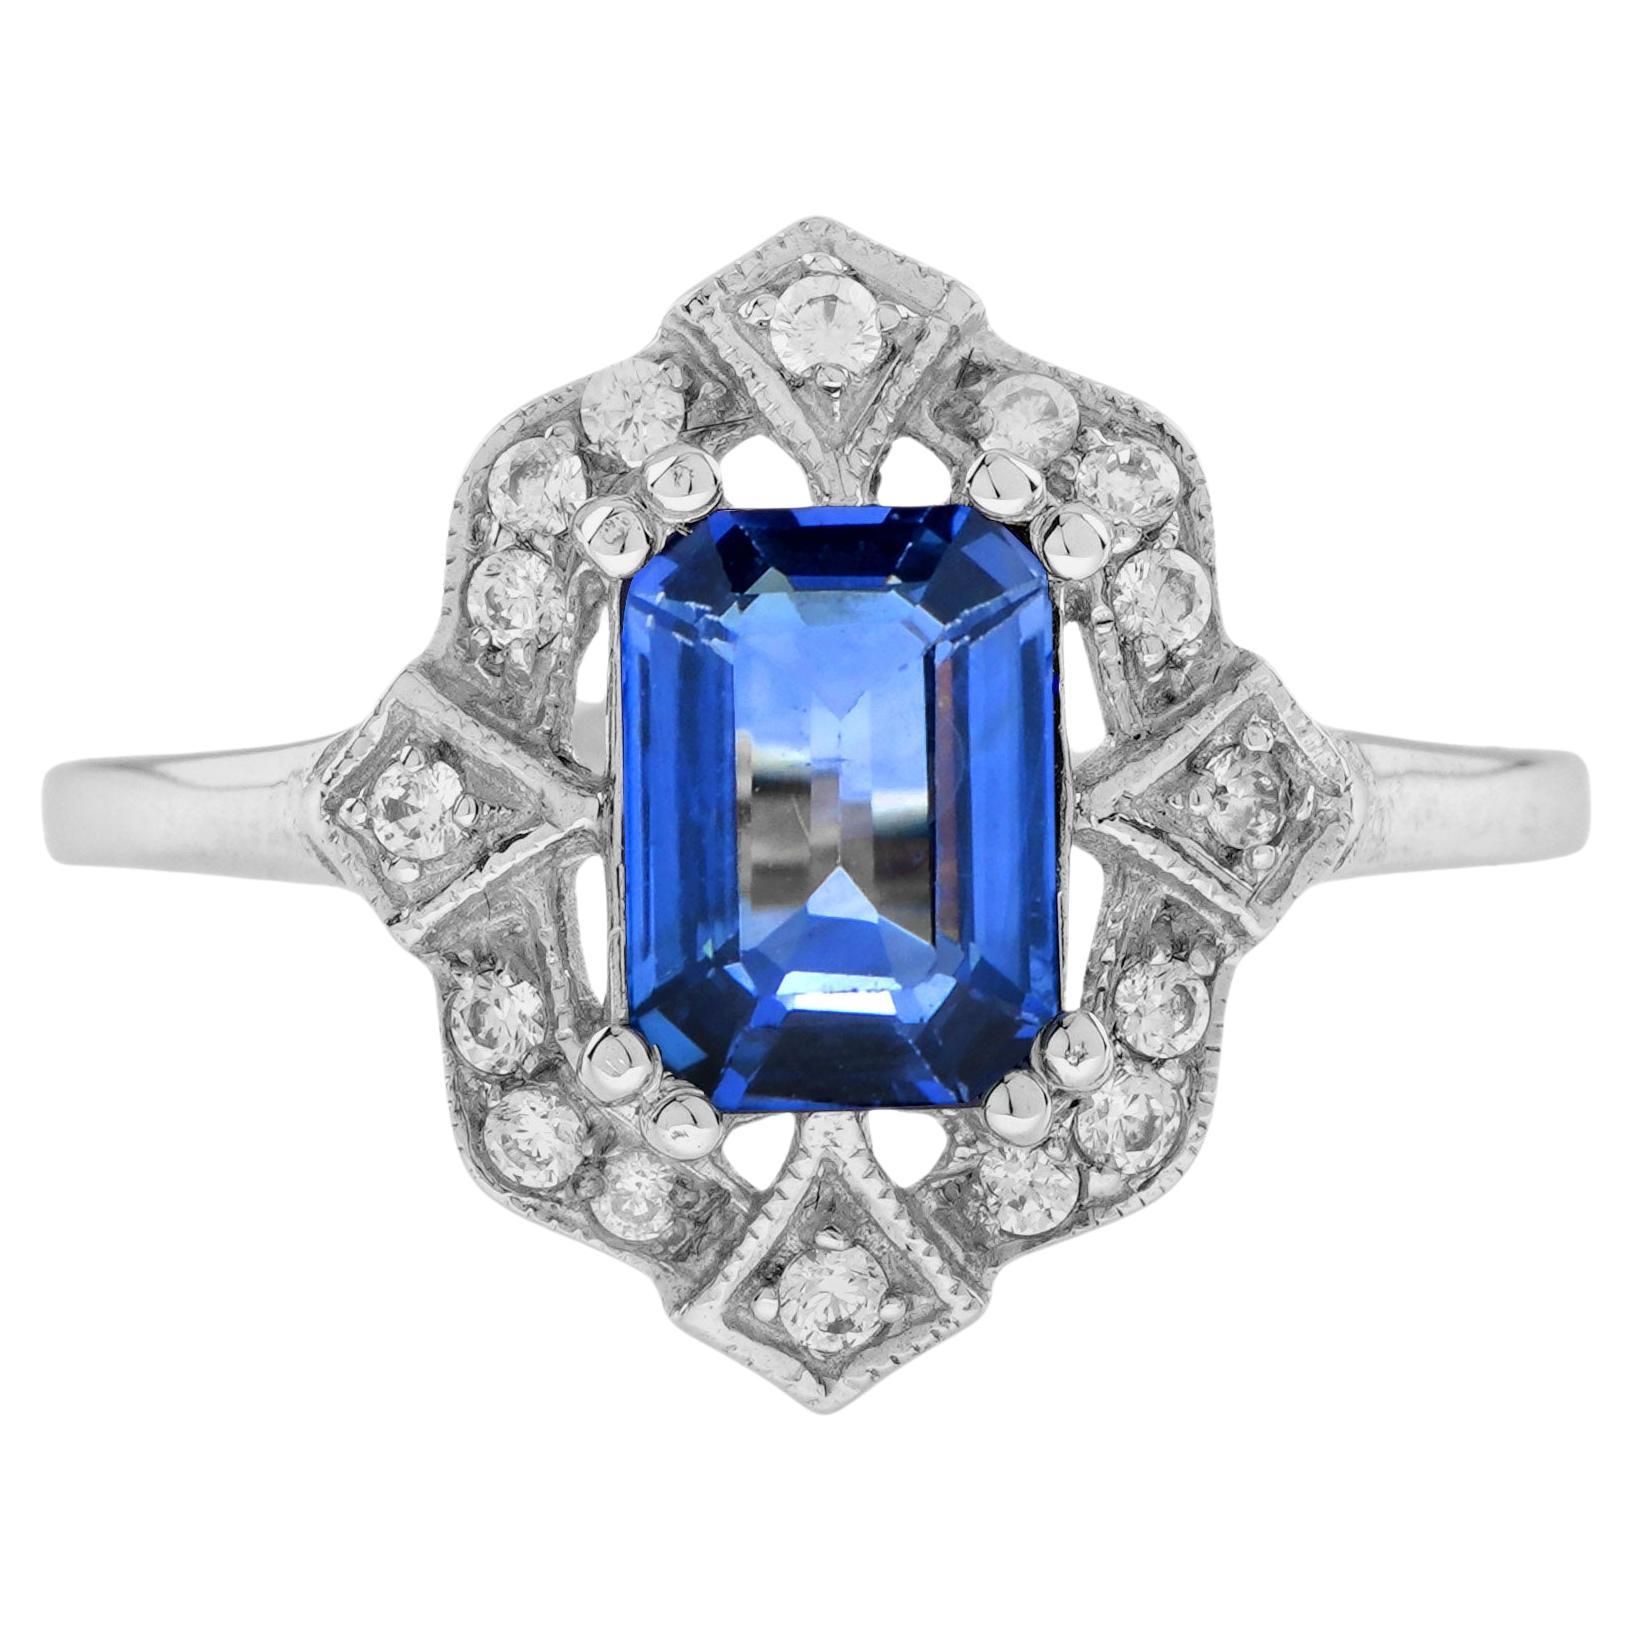 For Sale:  Emerald Cut Ceylon Sapphire and Diamond Halo Ring in 18K White Gold